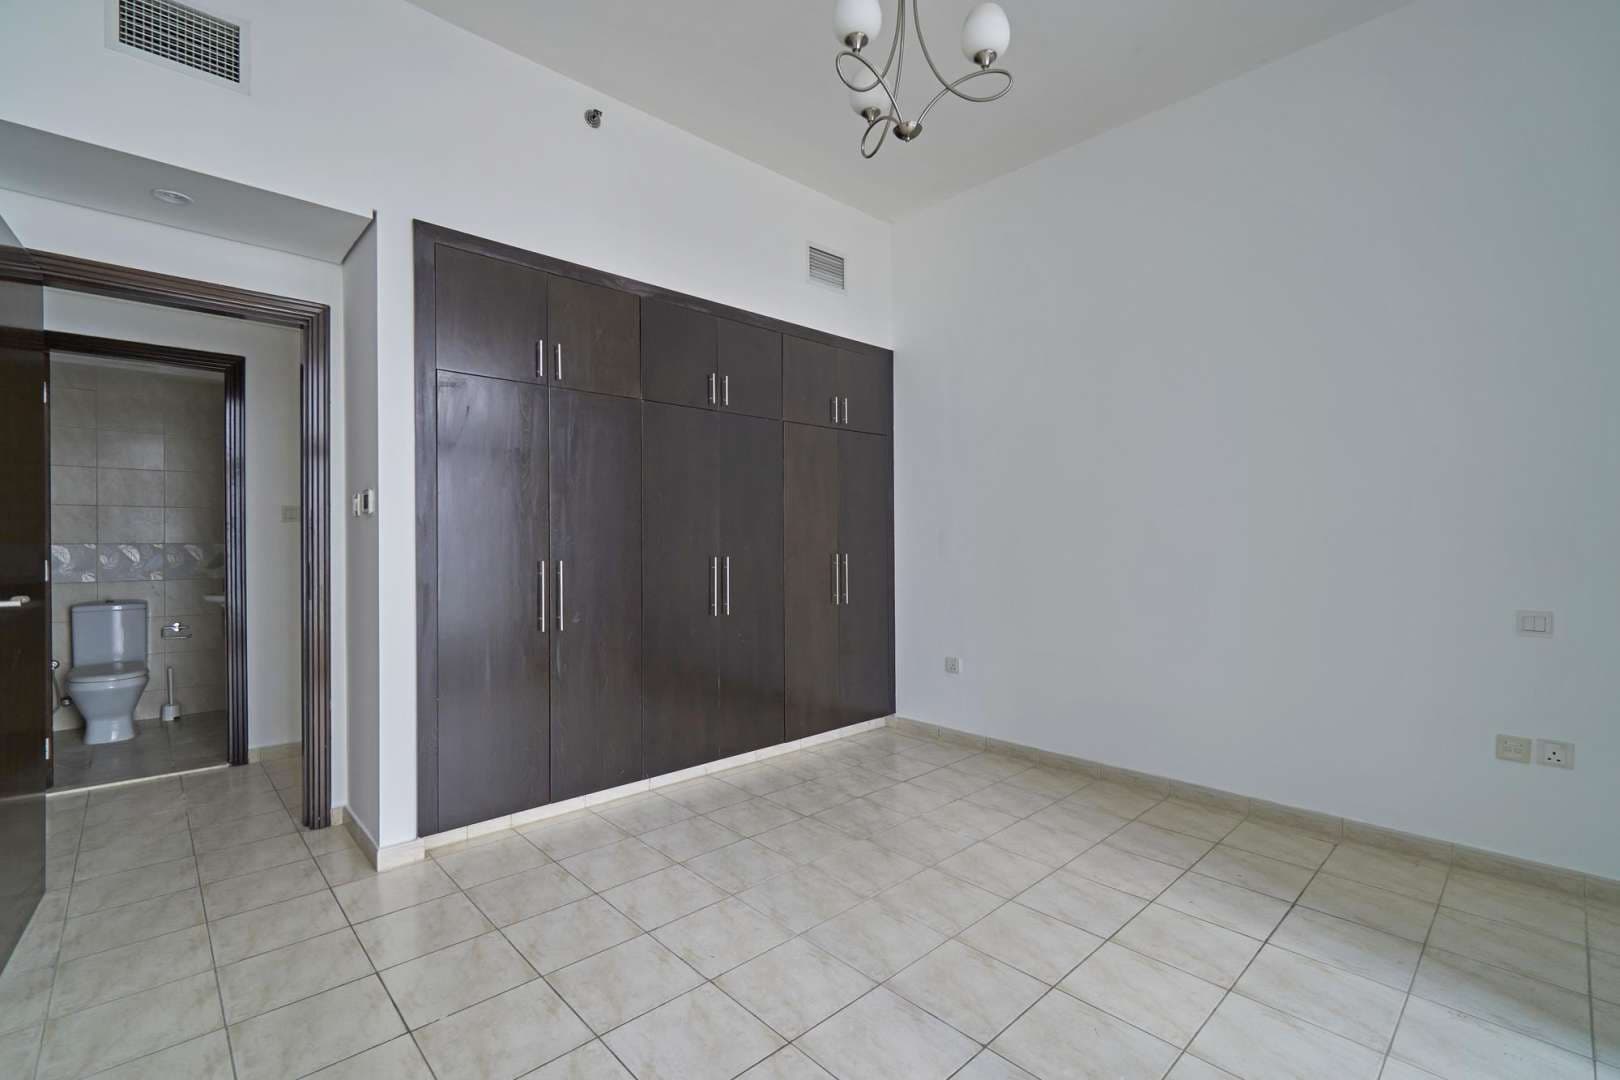 2 Bedroom Apartment For Sale Al Fahad Tower 2 Lp05453 28ae276057aba200.jpg